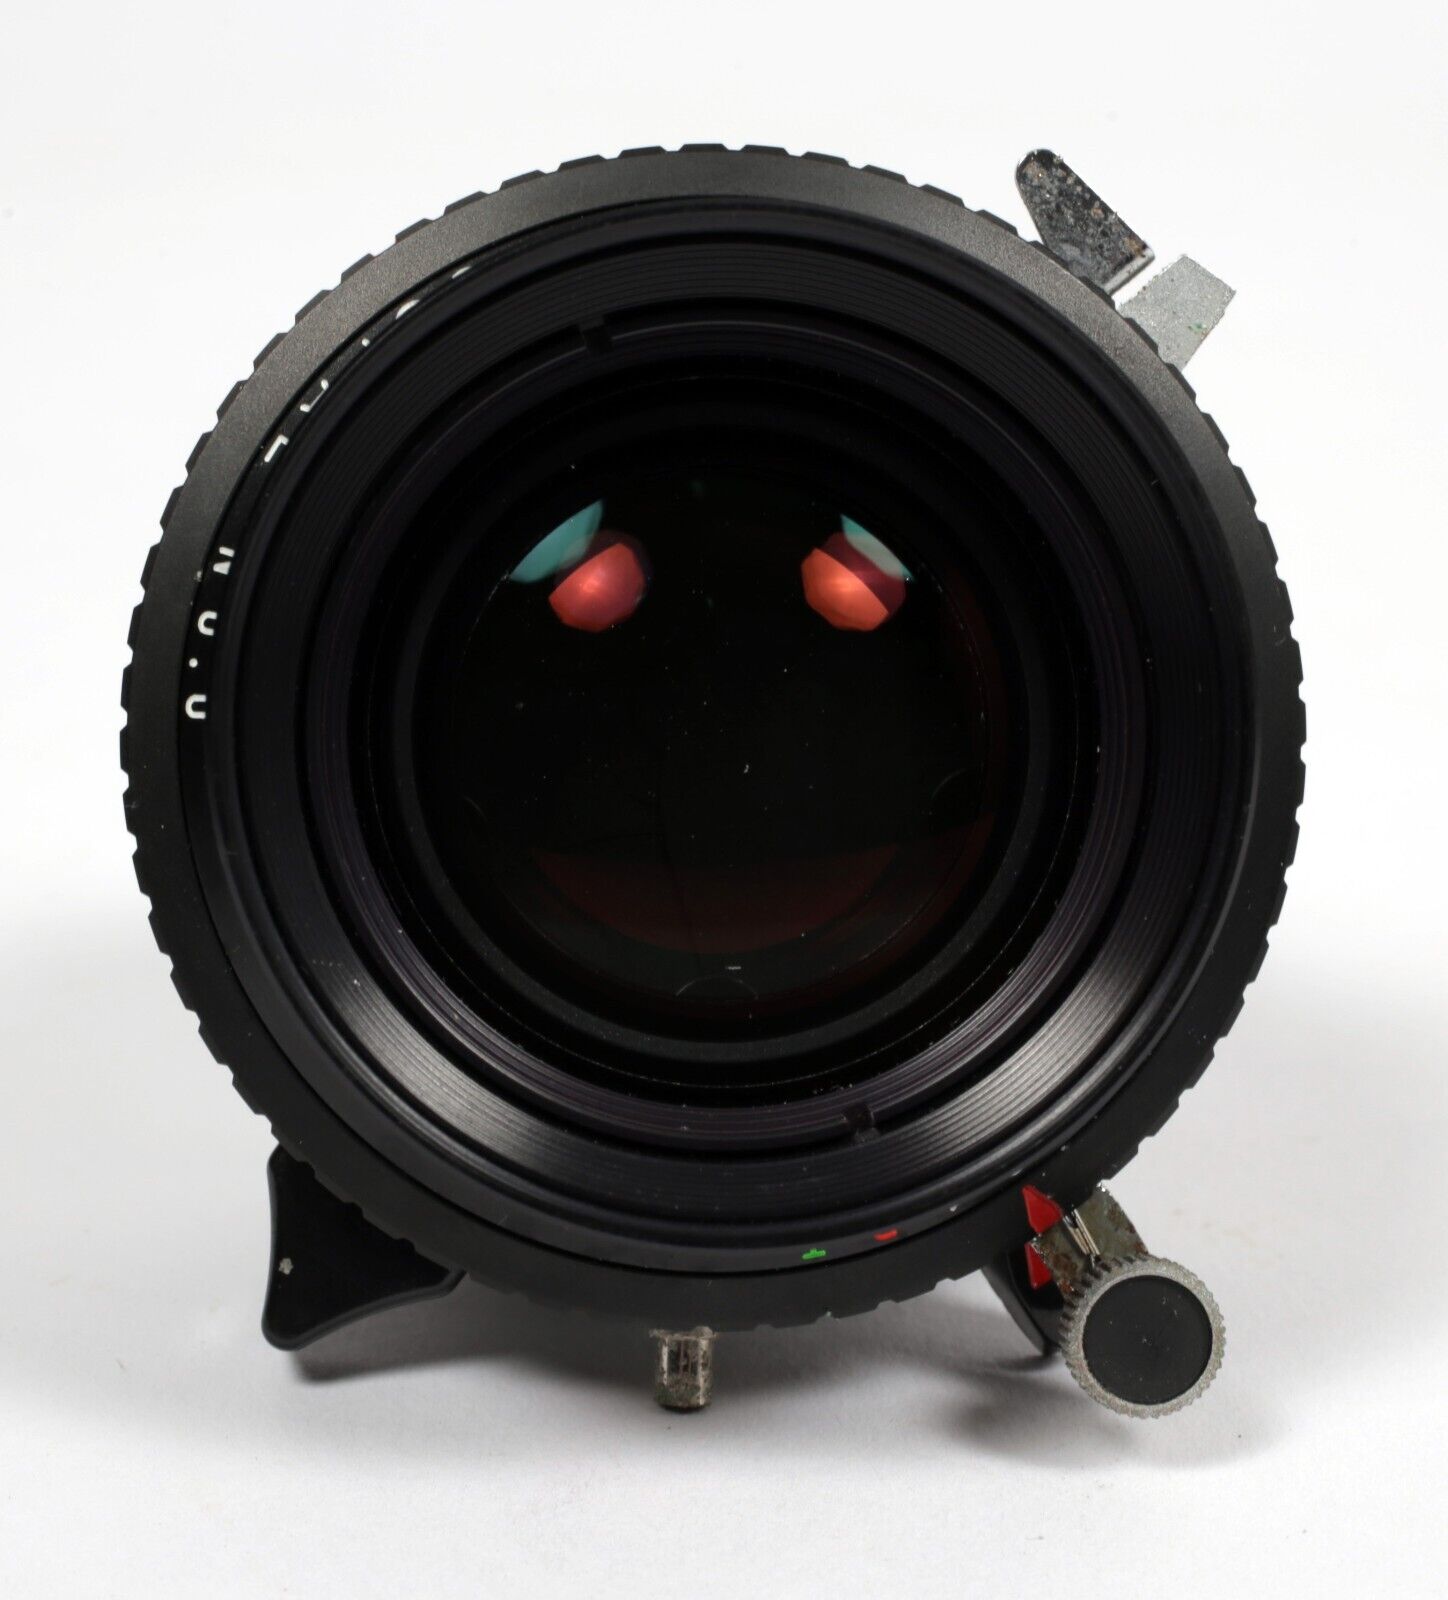 Rodenstock Apo-Sironar-S 150mm F5.6 Lens in Copal #0 Shutter #8952